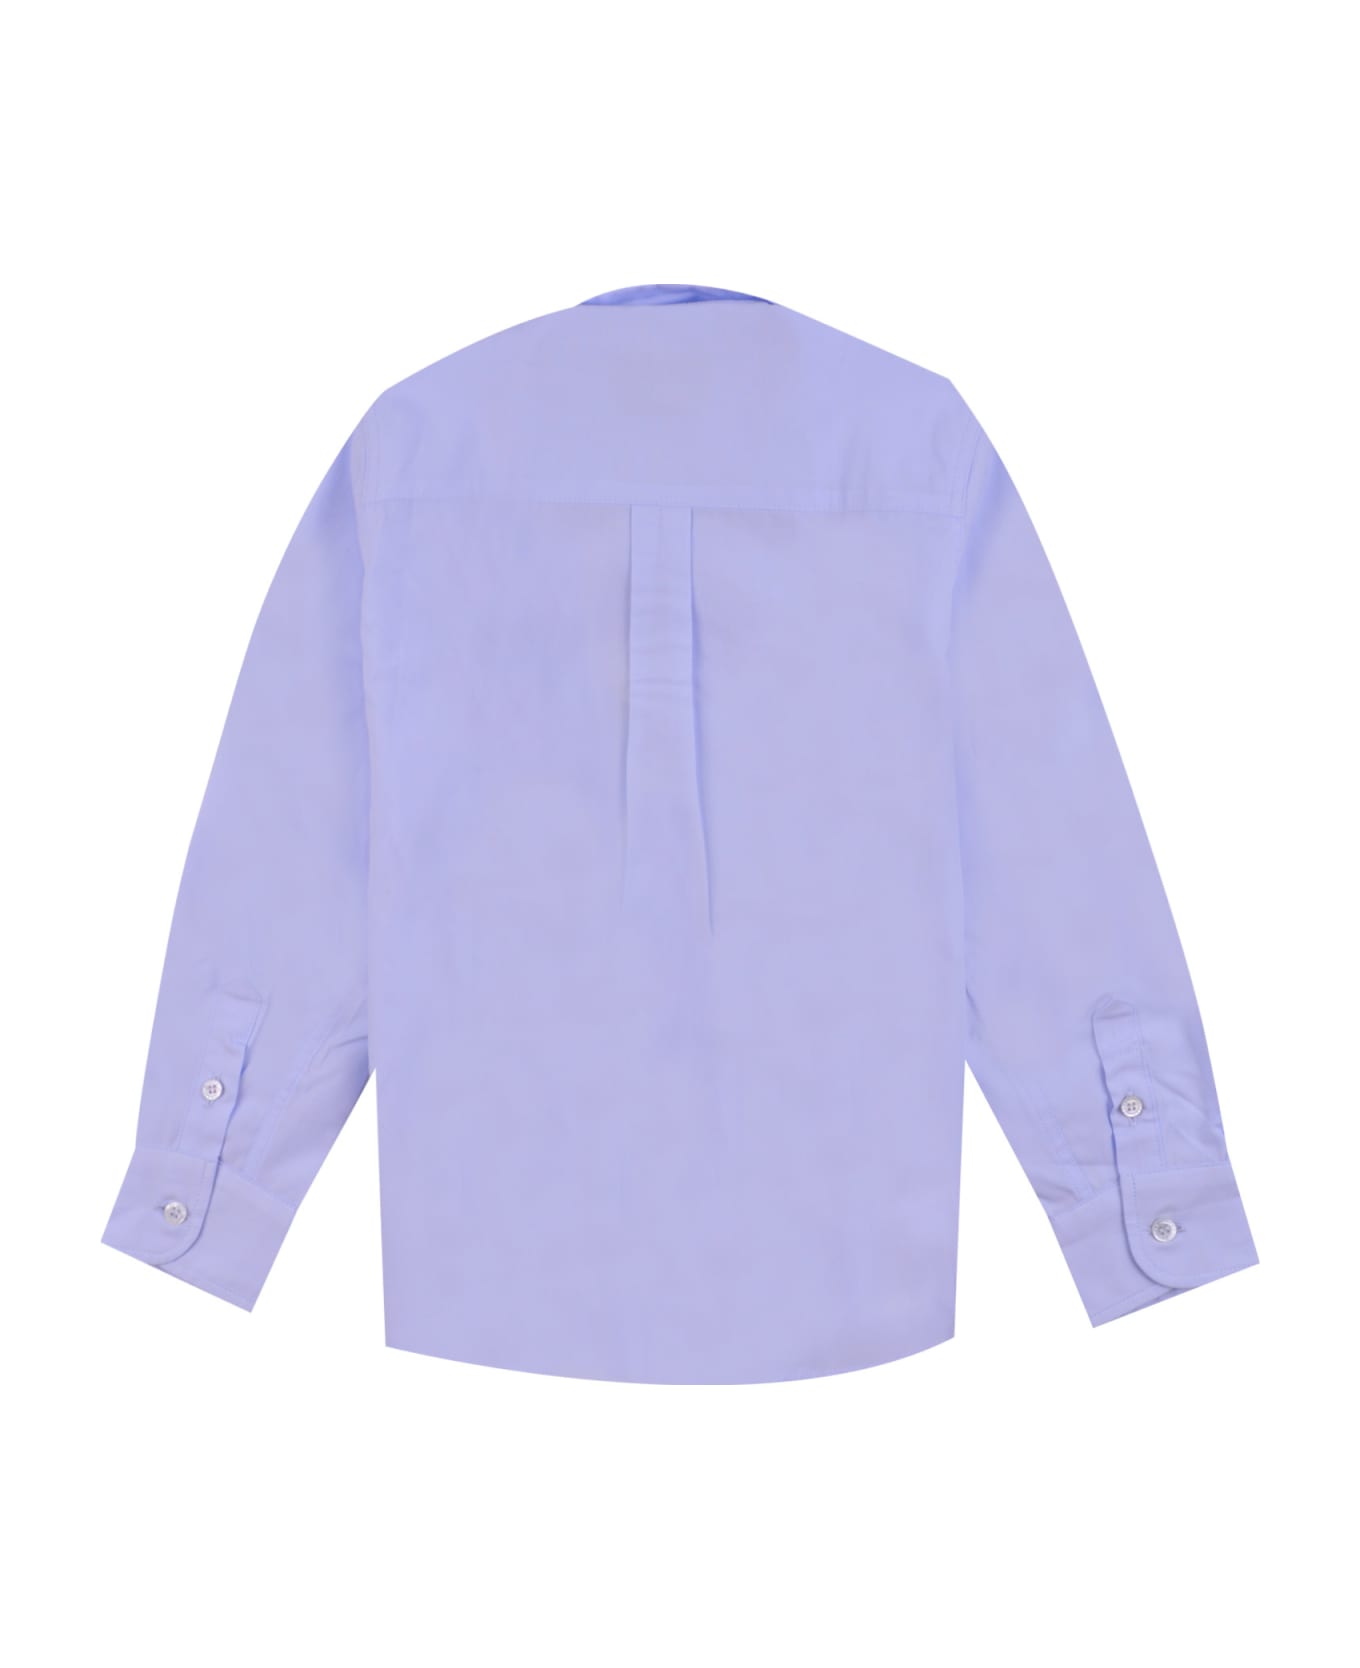 Fendi Cotton Shirt - Light blue